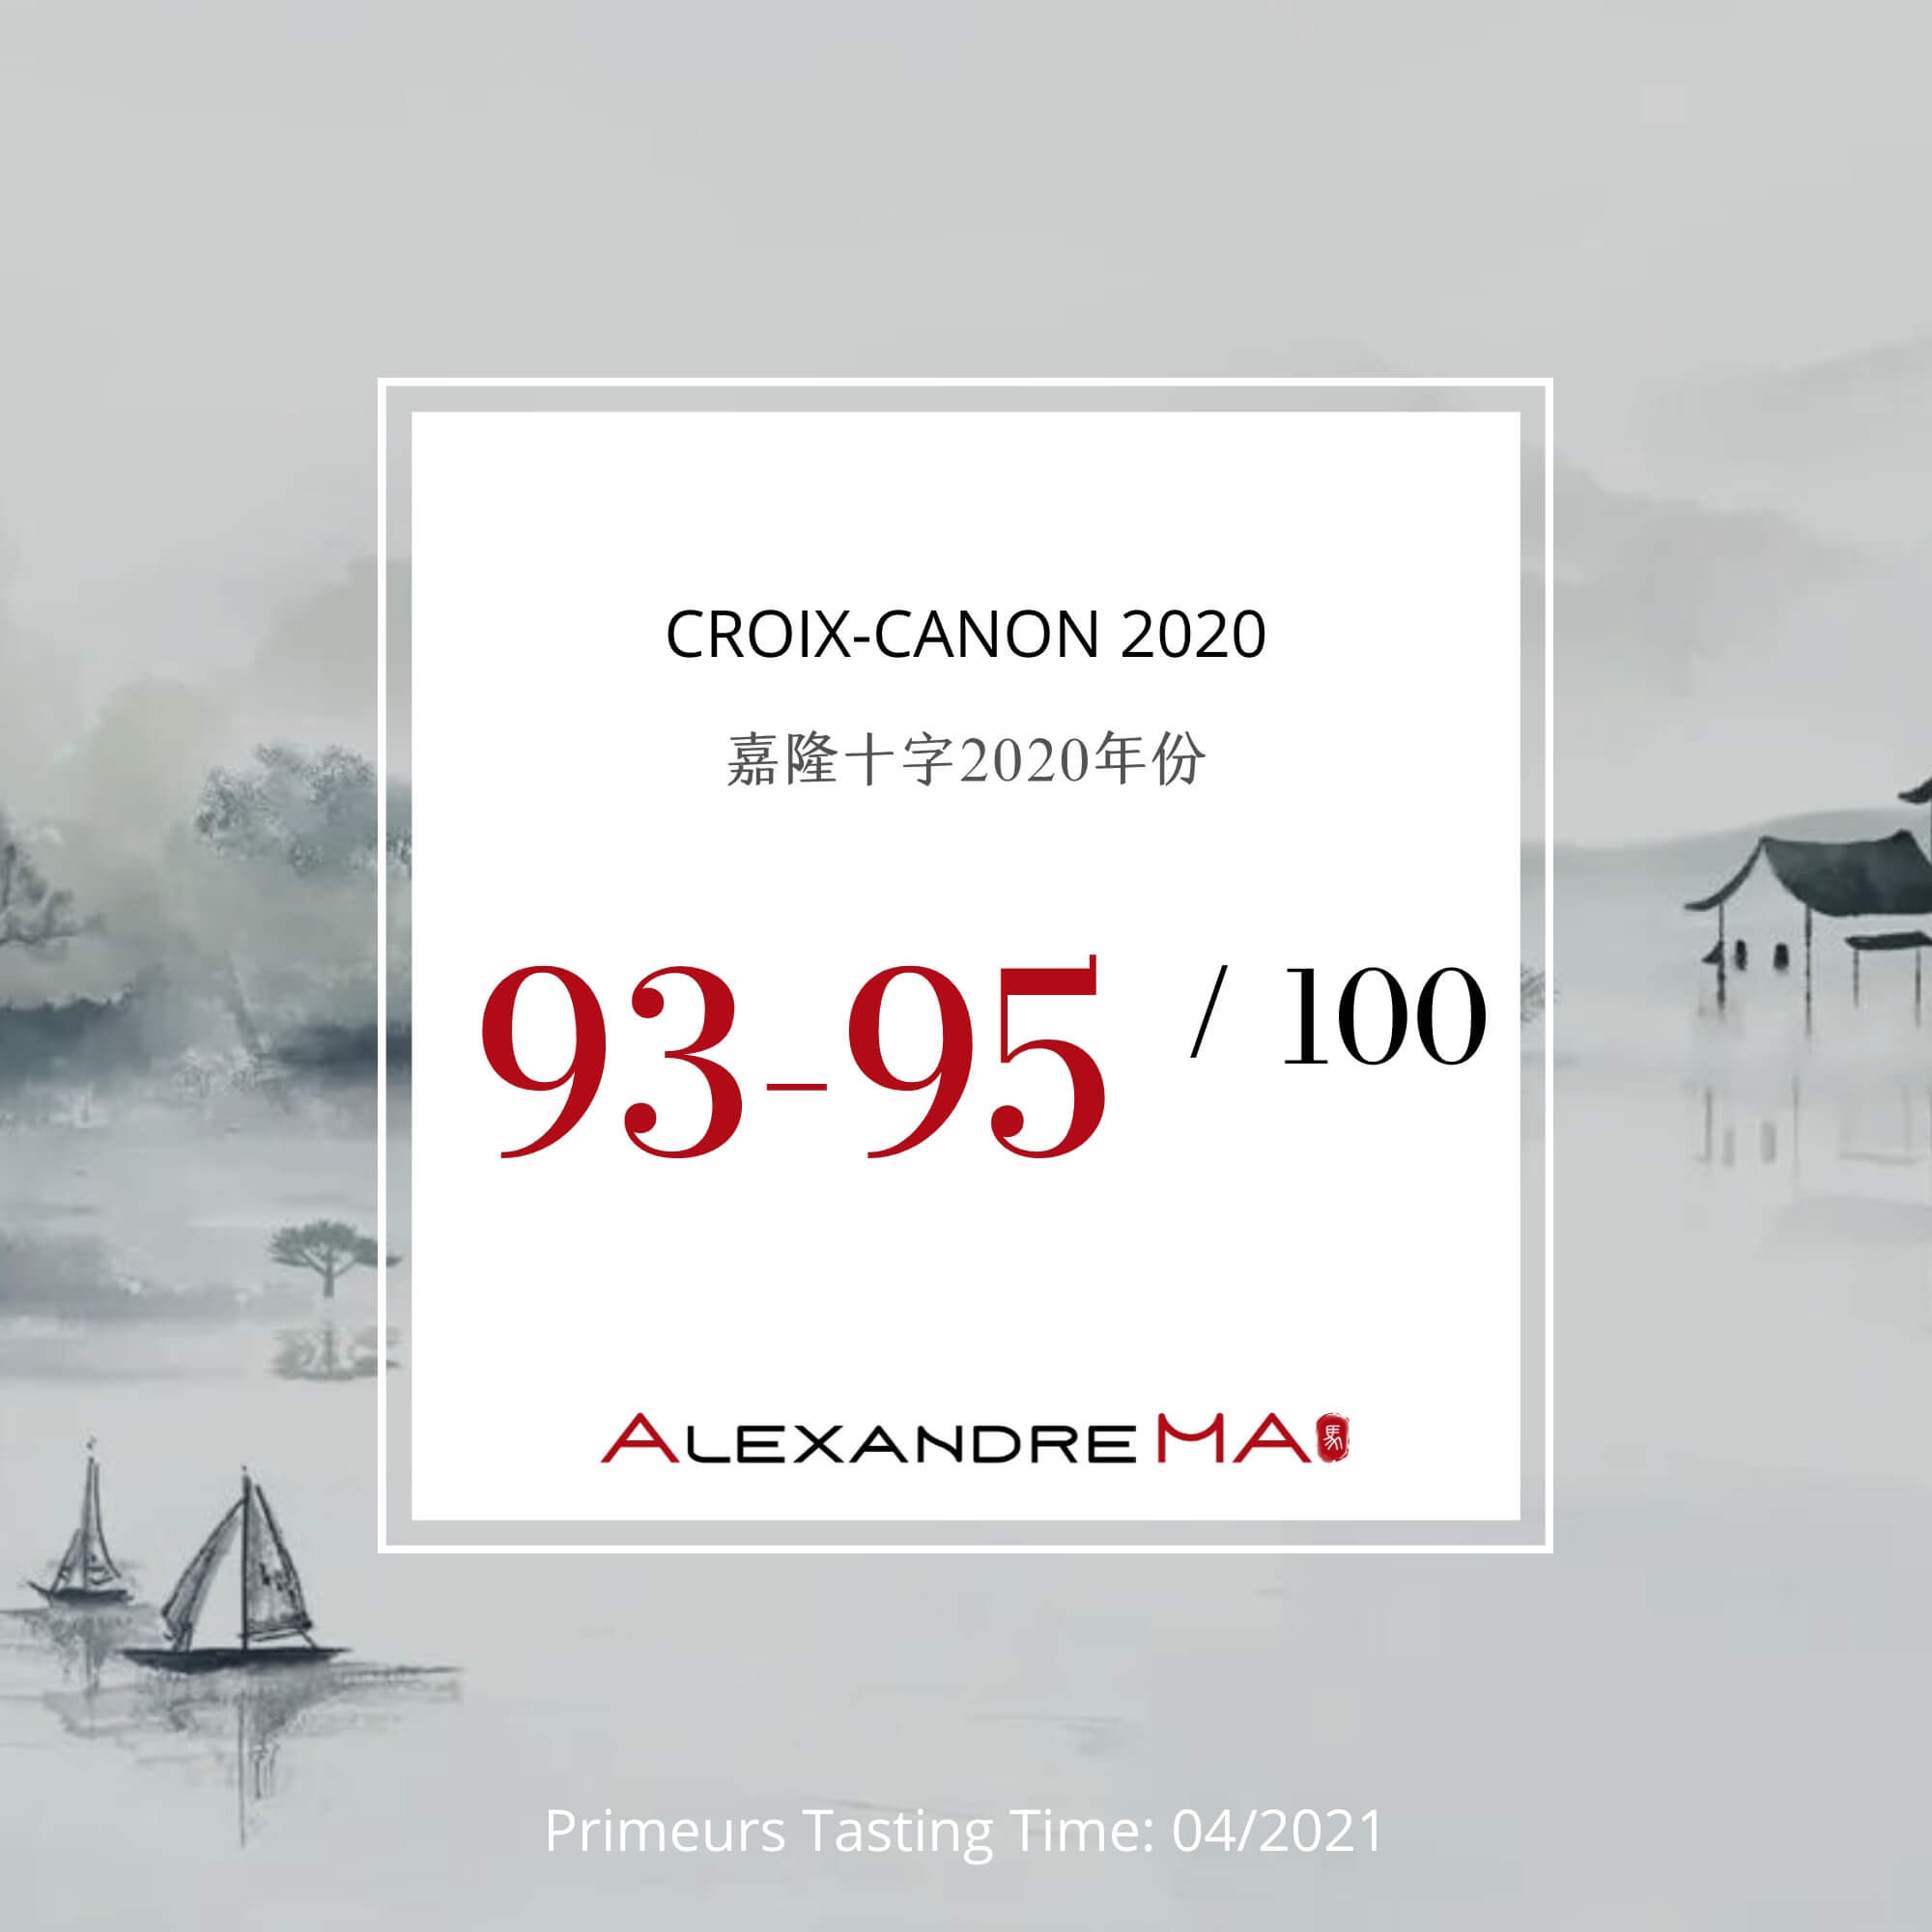 Château Canon-Croix-Canon 2020 嘉隆十字 - Alexandre Ma